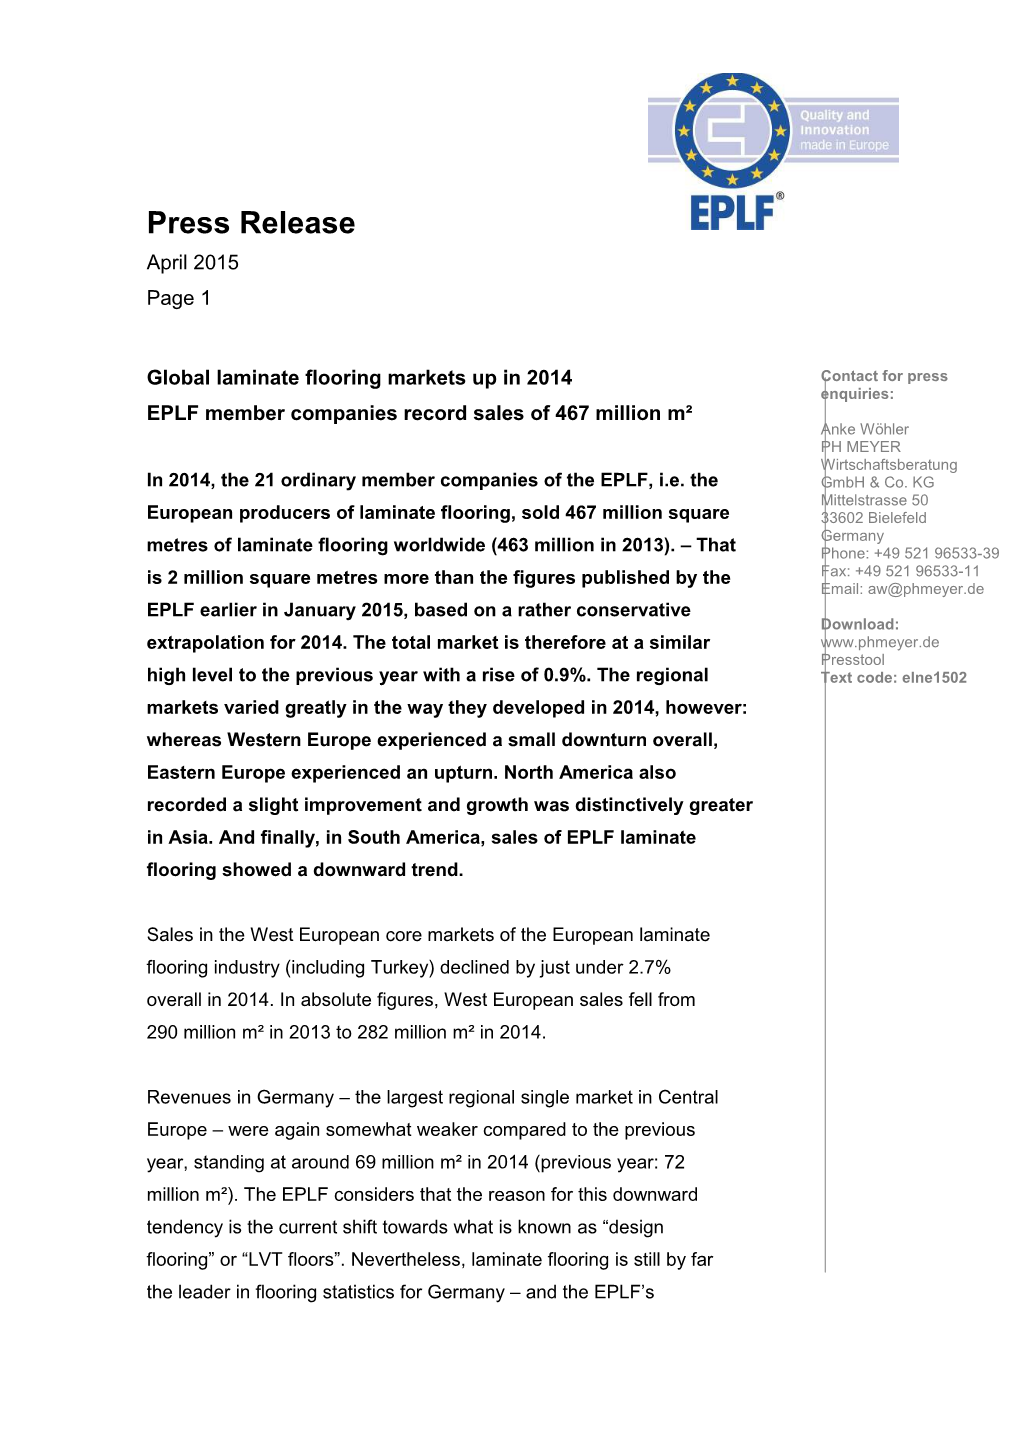 EPLF Member Companies Record Sales of 467 Million M